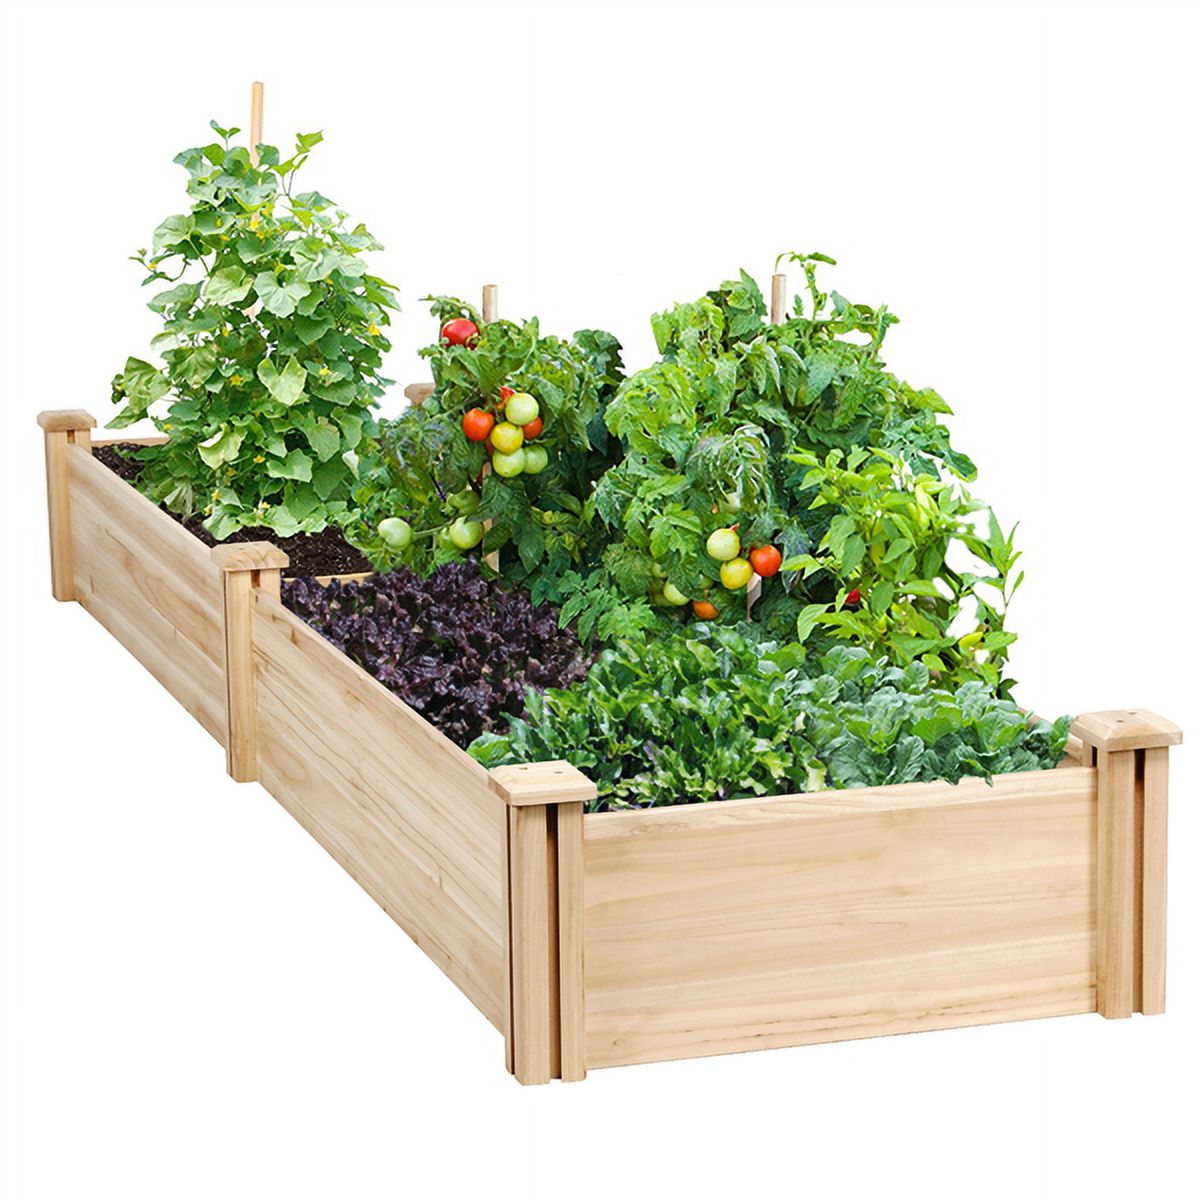 Alden Design Wooden Raised Garden Bed Planter Box for Patio Yard,Natural Wood - image 1 of 6